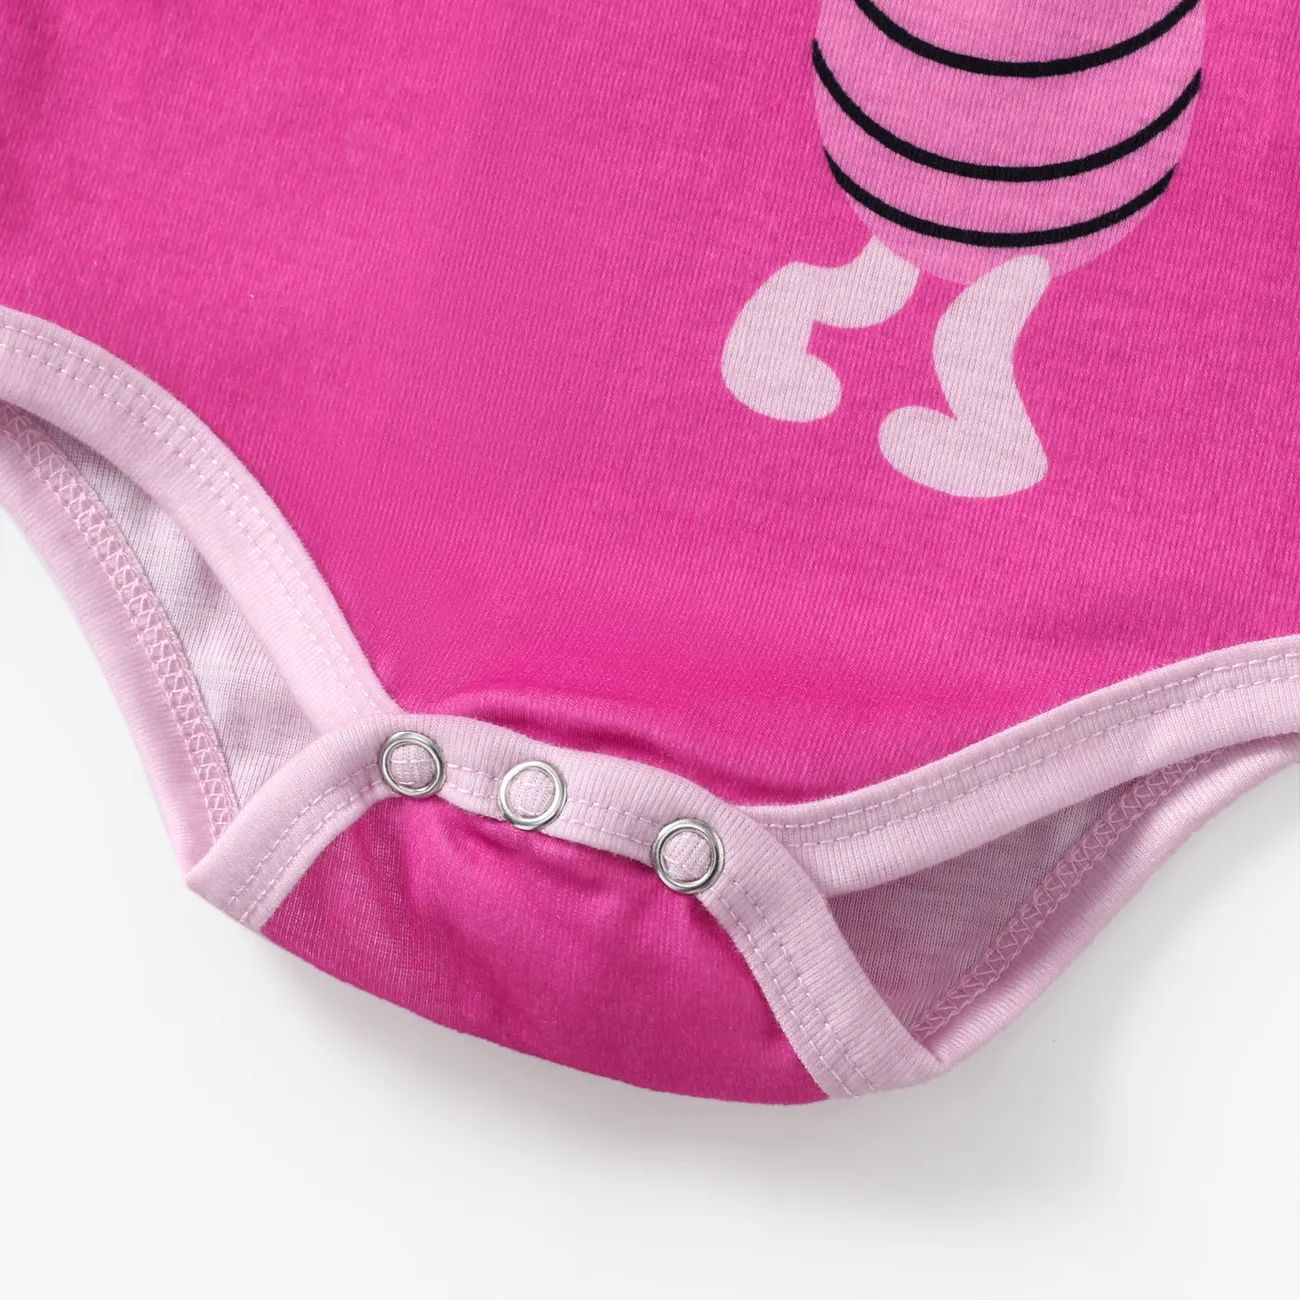 Disney Winnie the Pooh Baby Girls/Boys 1pc Naia™ Character Print Short-sleeve  Romper Pink big image 1